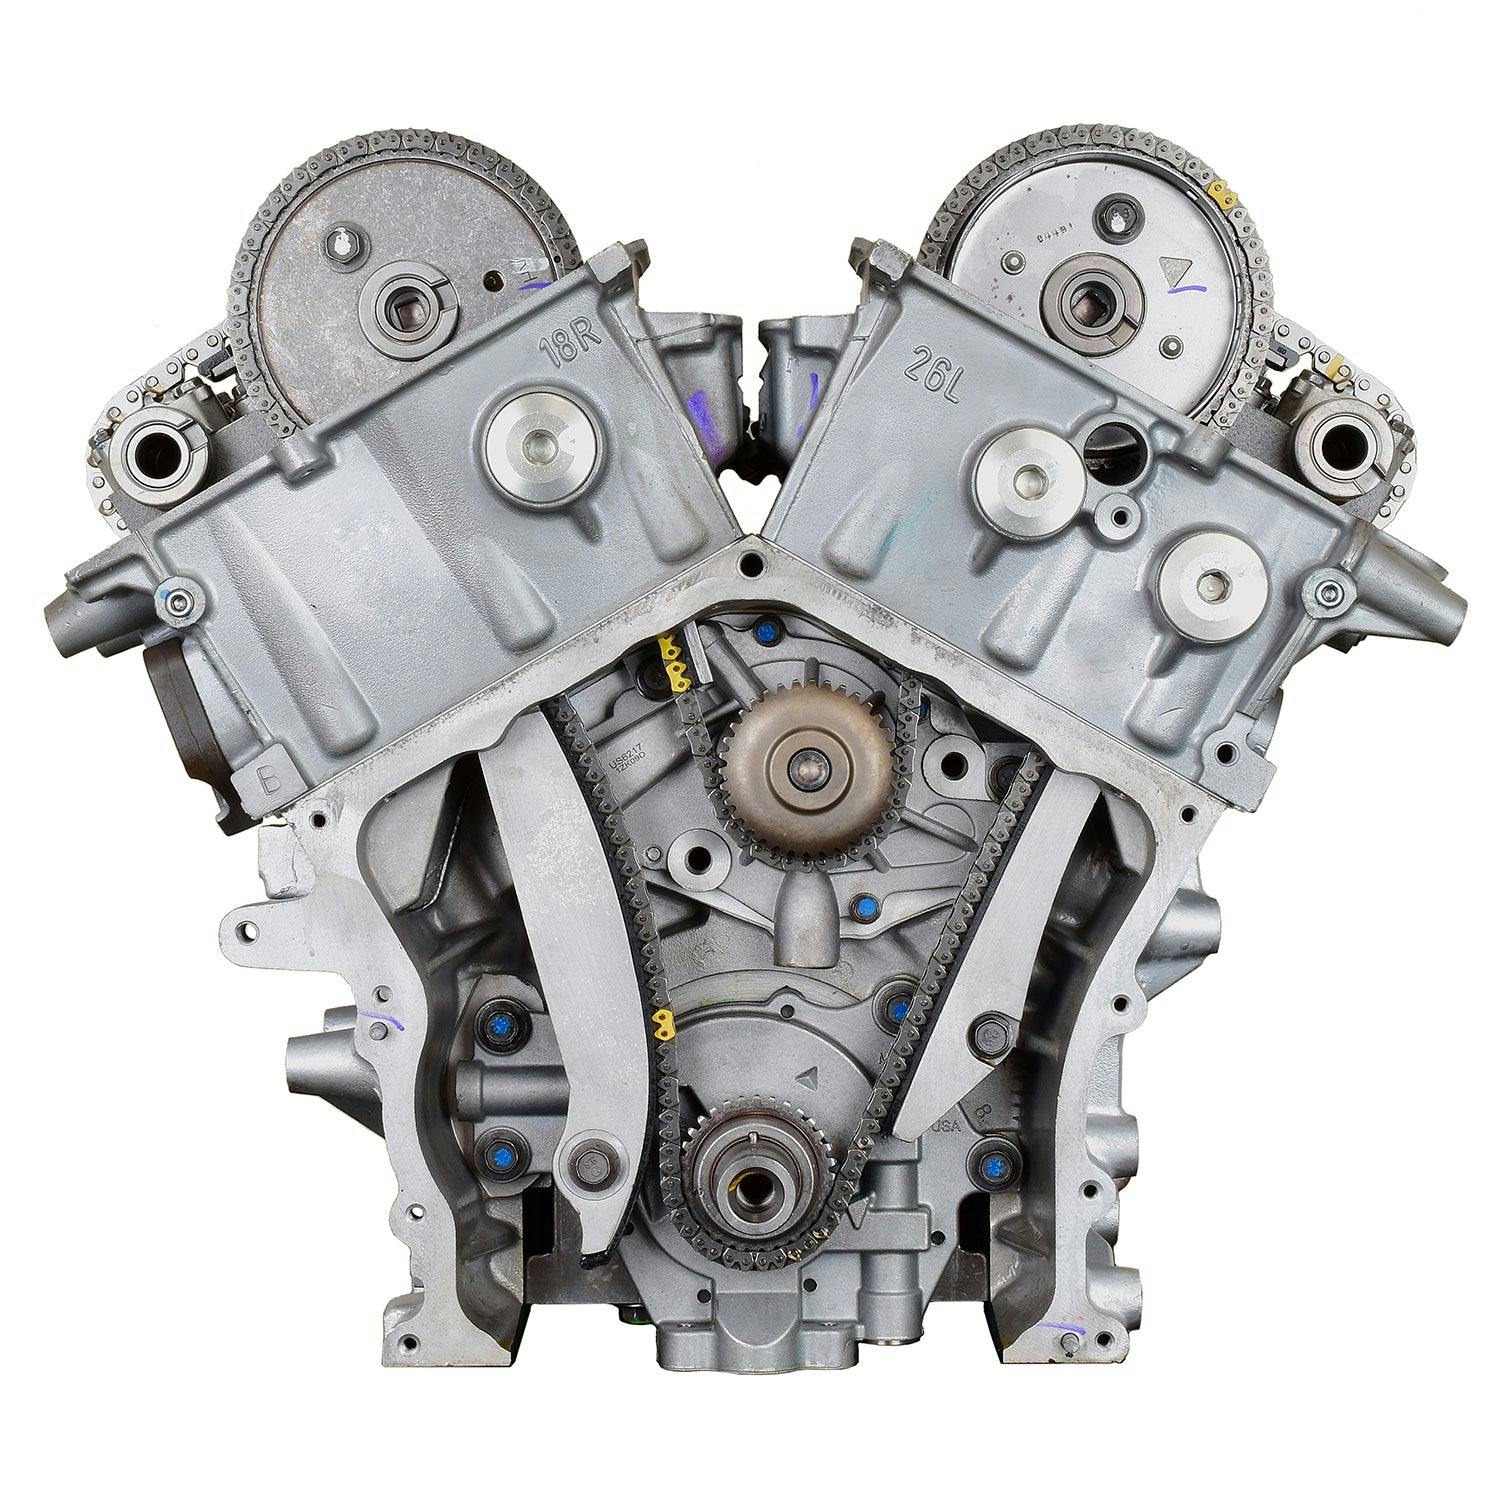 2.7L V6 Engine for 2009-2010 Chrysler 300, Sebring/Dodge Avenger, Charger